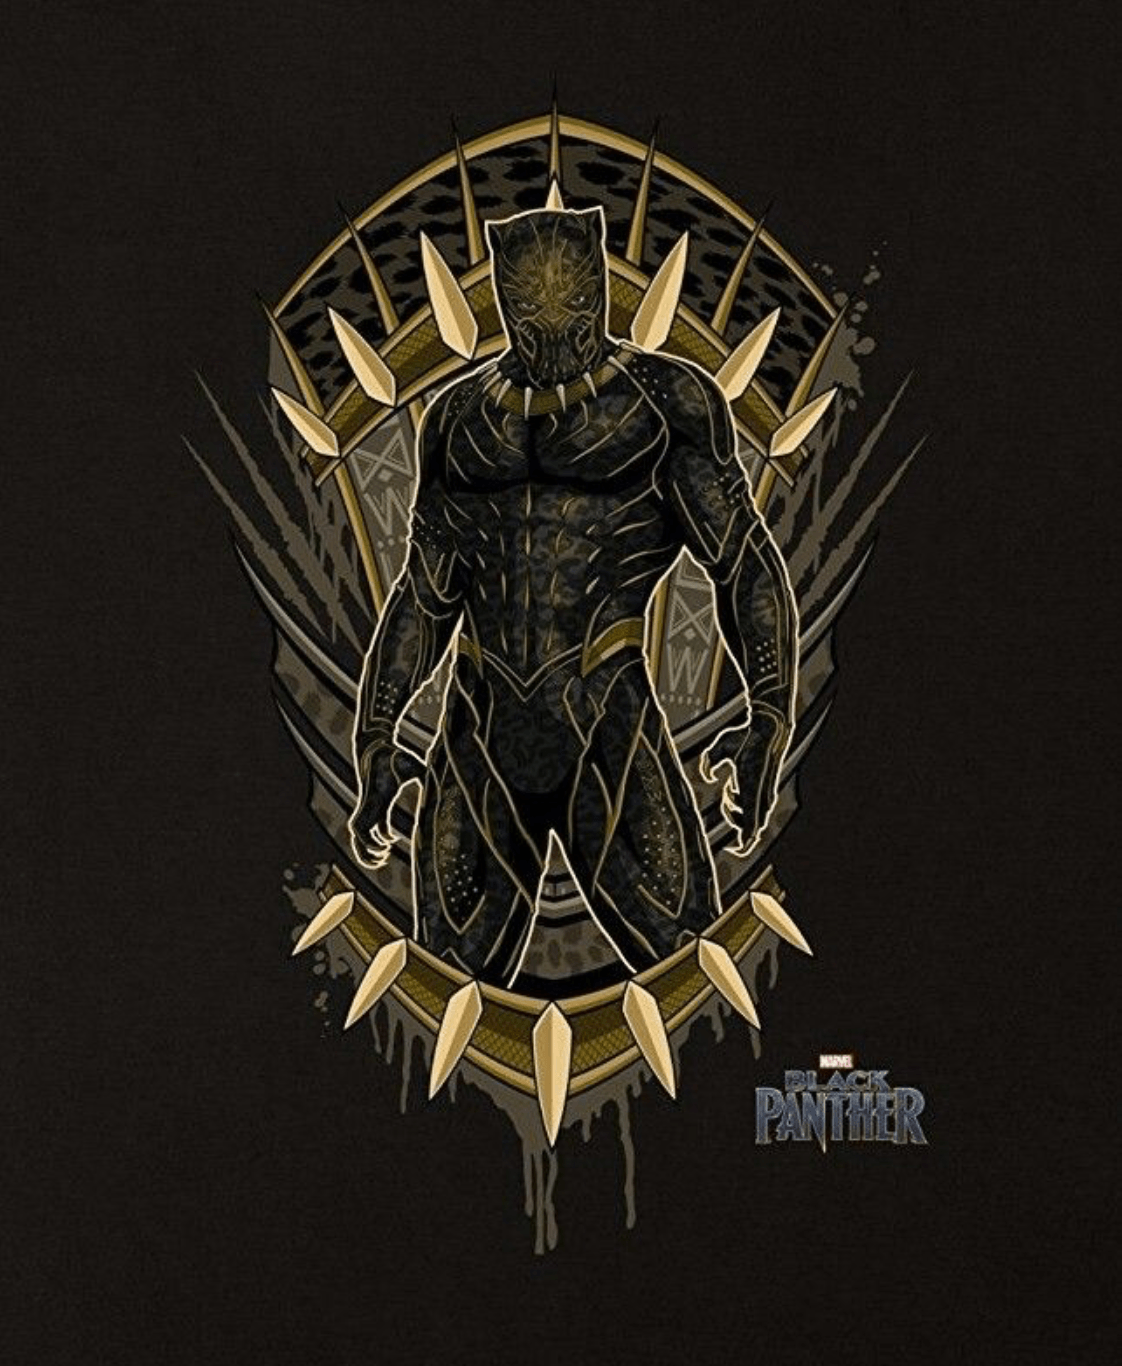 Black Panther Movie Poster Featuring Erik Killmonger In Golden